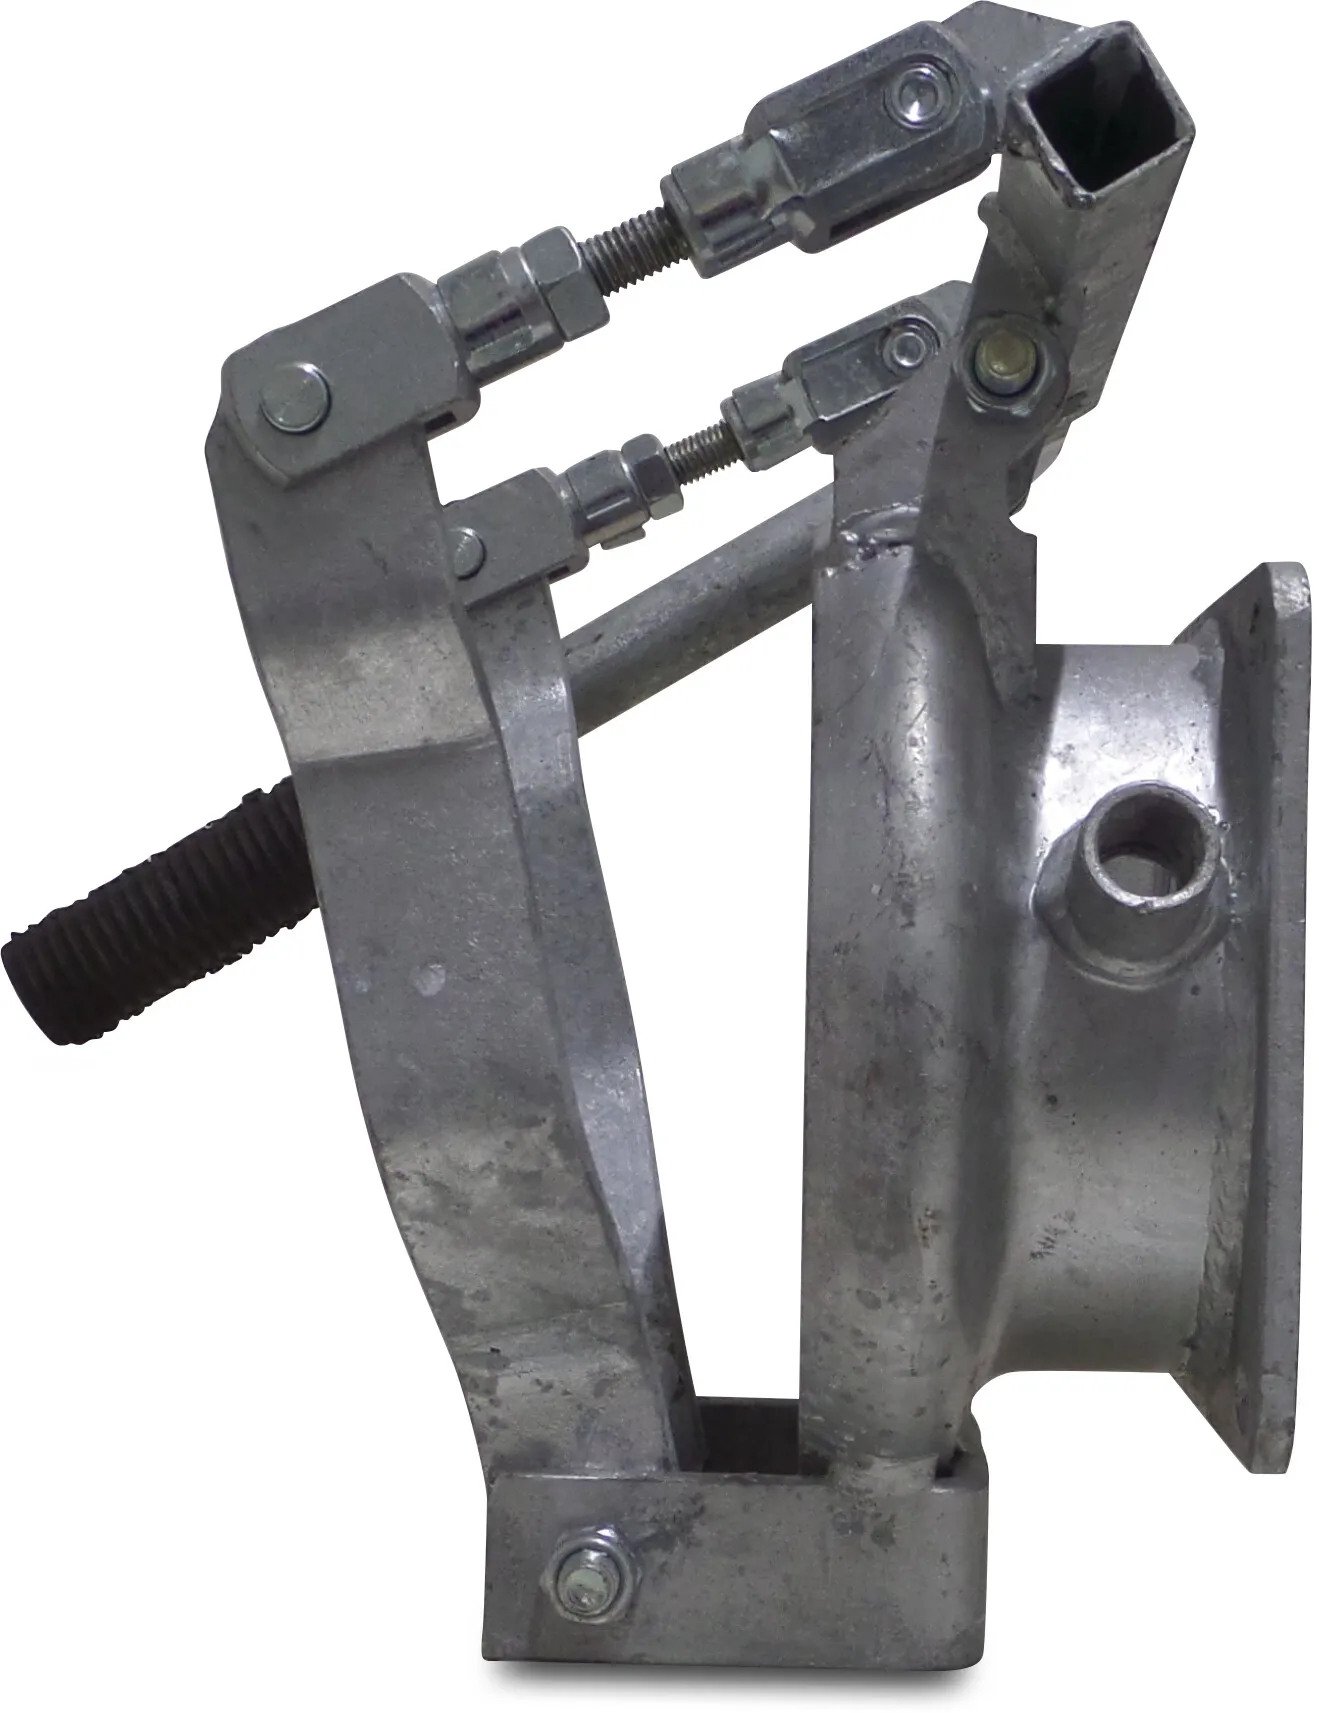 Schnellkuppler Stahl Verzinkt 159 mm x 6" M-Teil Kardan x Quadratflansch type Kardan Kurz